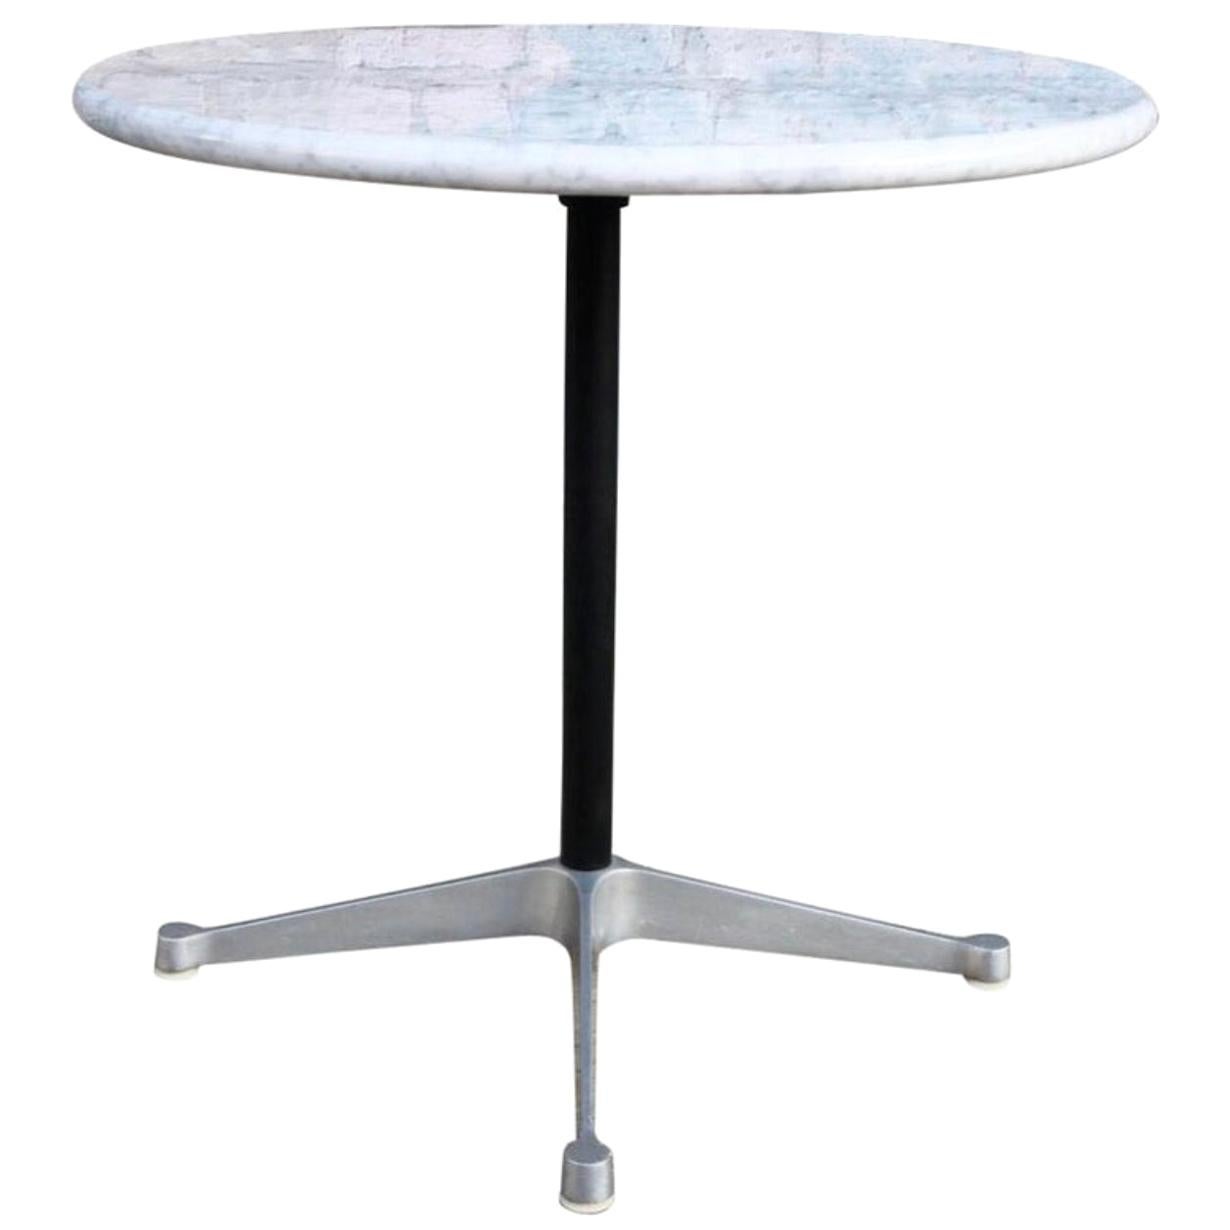 Herman Miller Eames Aluminum Dining Table Base with Custom Carrara Marble Top